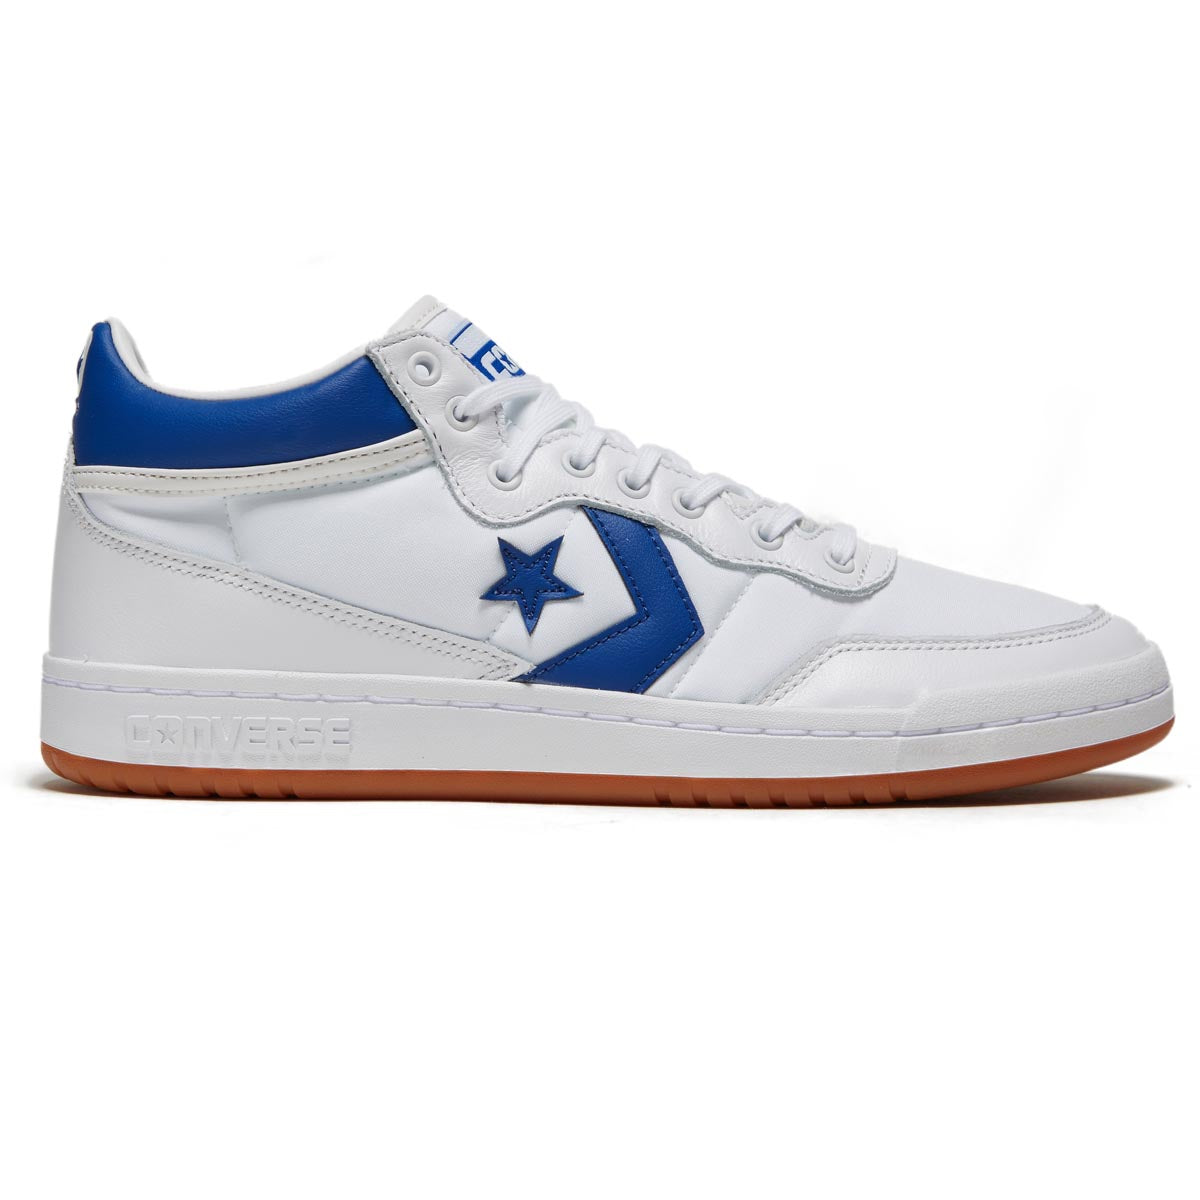 Converse Fastbreak Pro Leather Mid Shoes - White/Blue/White image 1